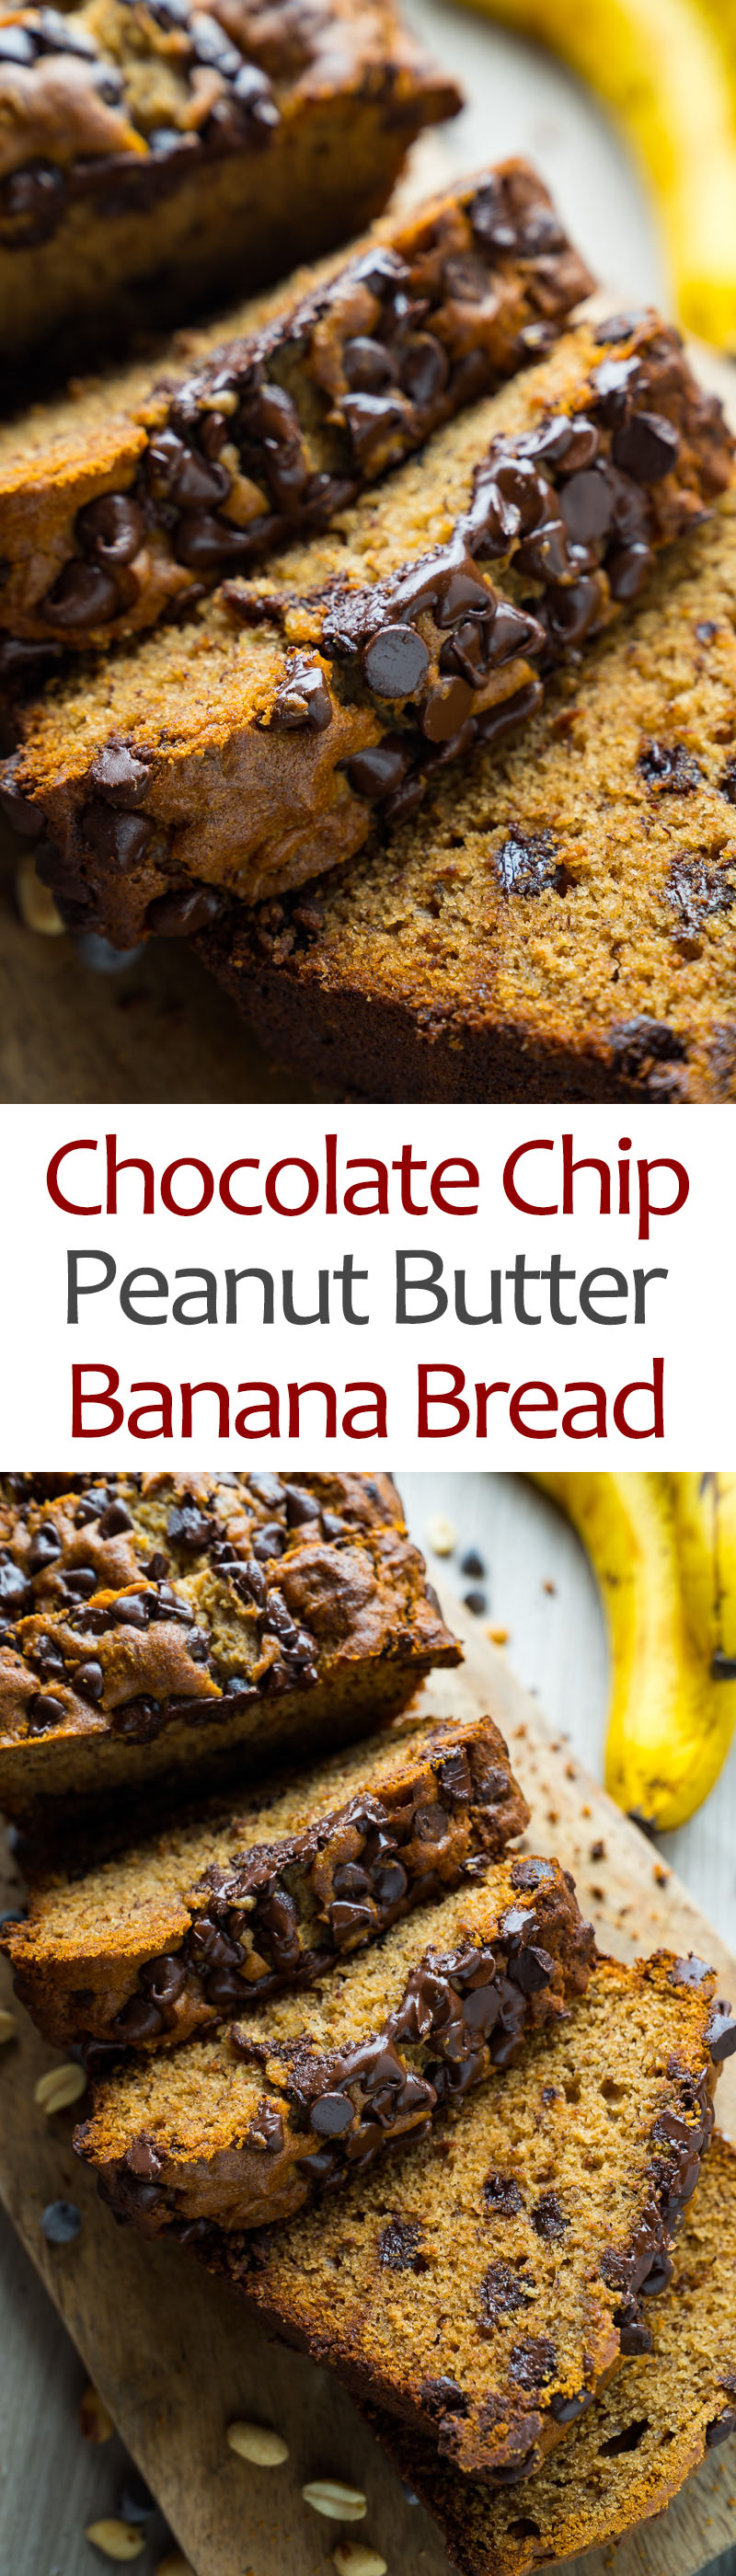 Chocolate Chip Peanut Butter Banana Bread